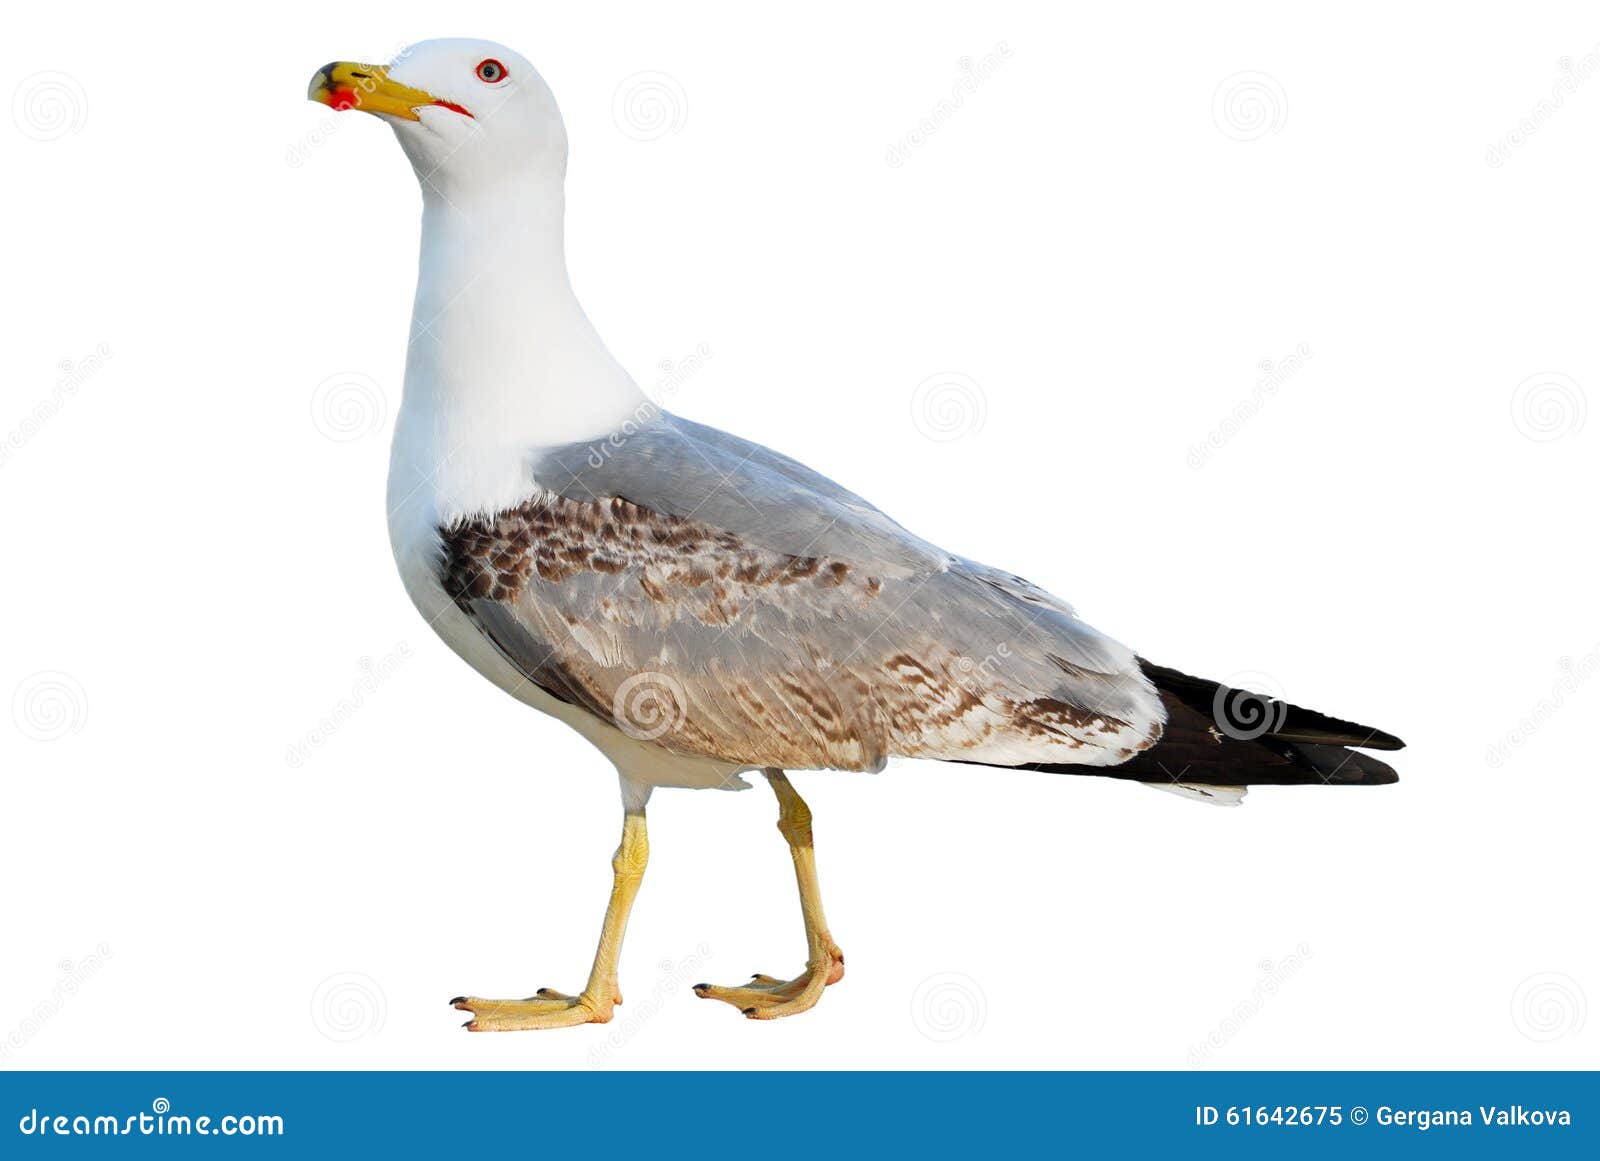 seagull  on white background